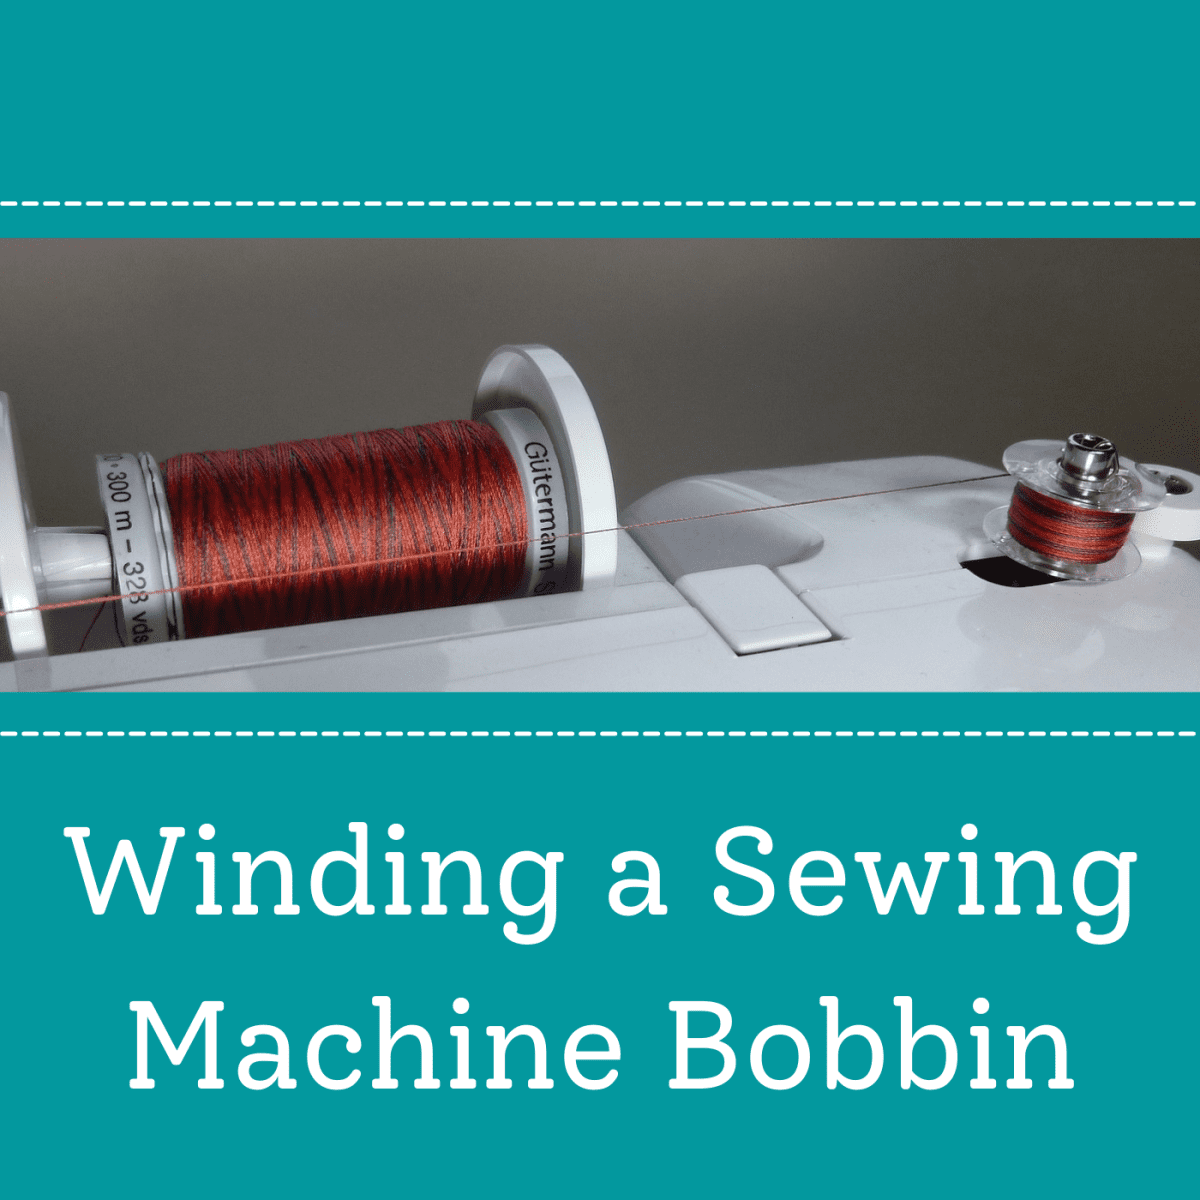 She's A Sewing Machine Mechanic: Drop-in Bobbin Case Position